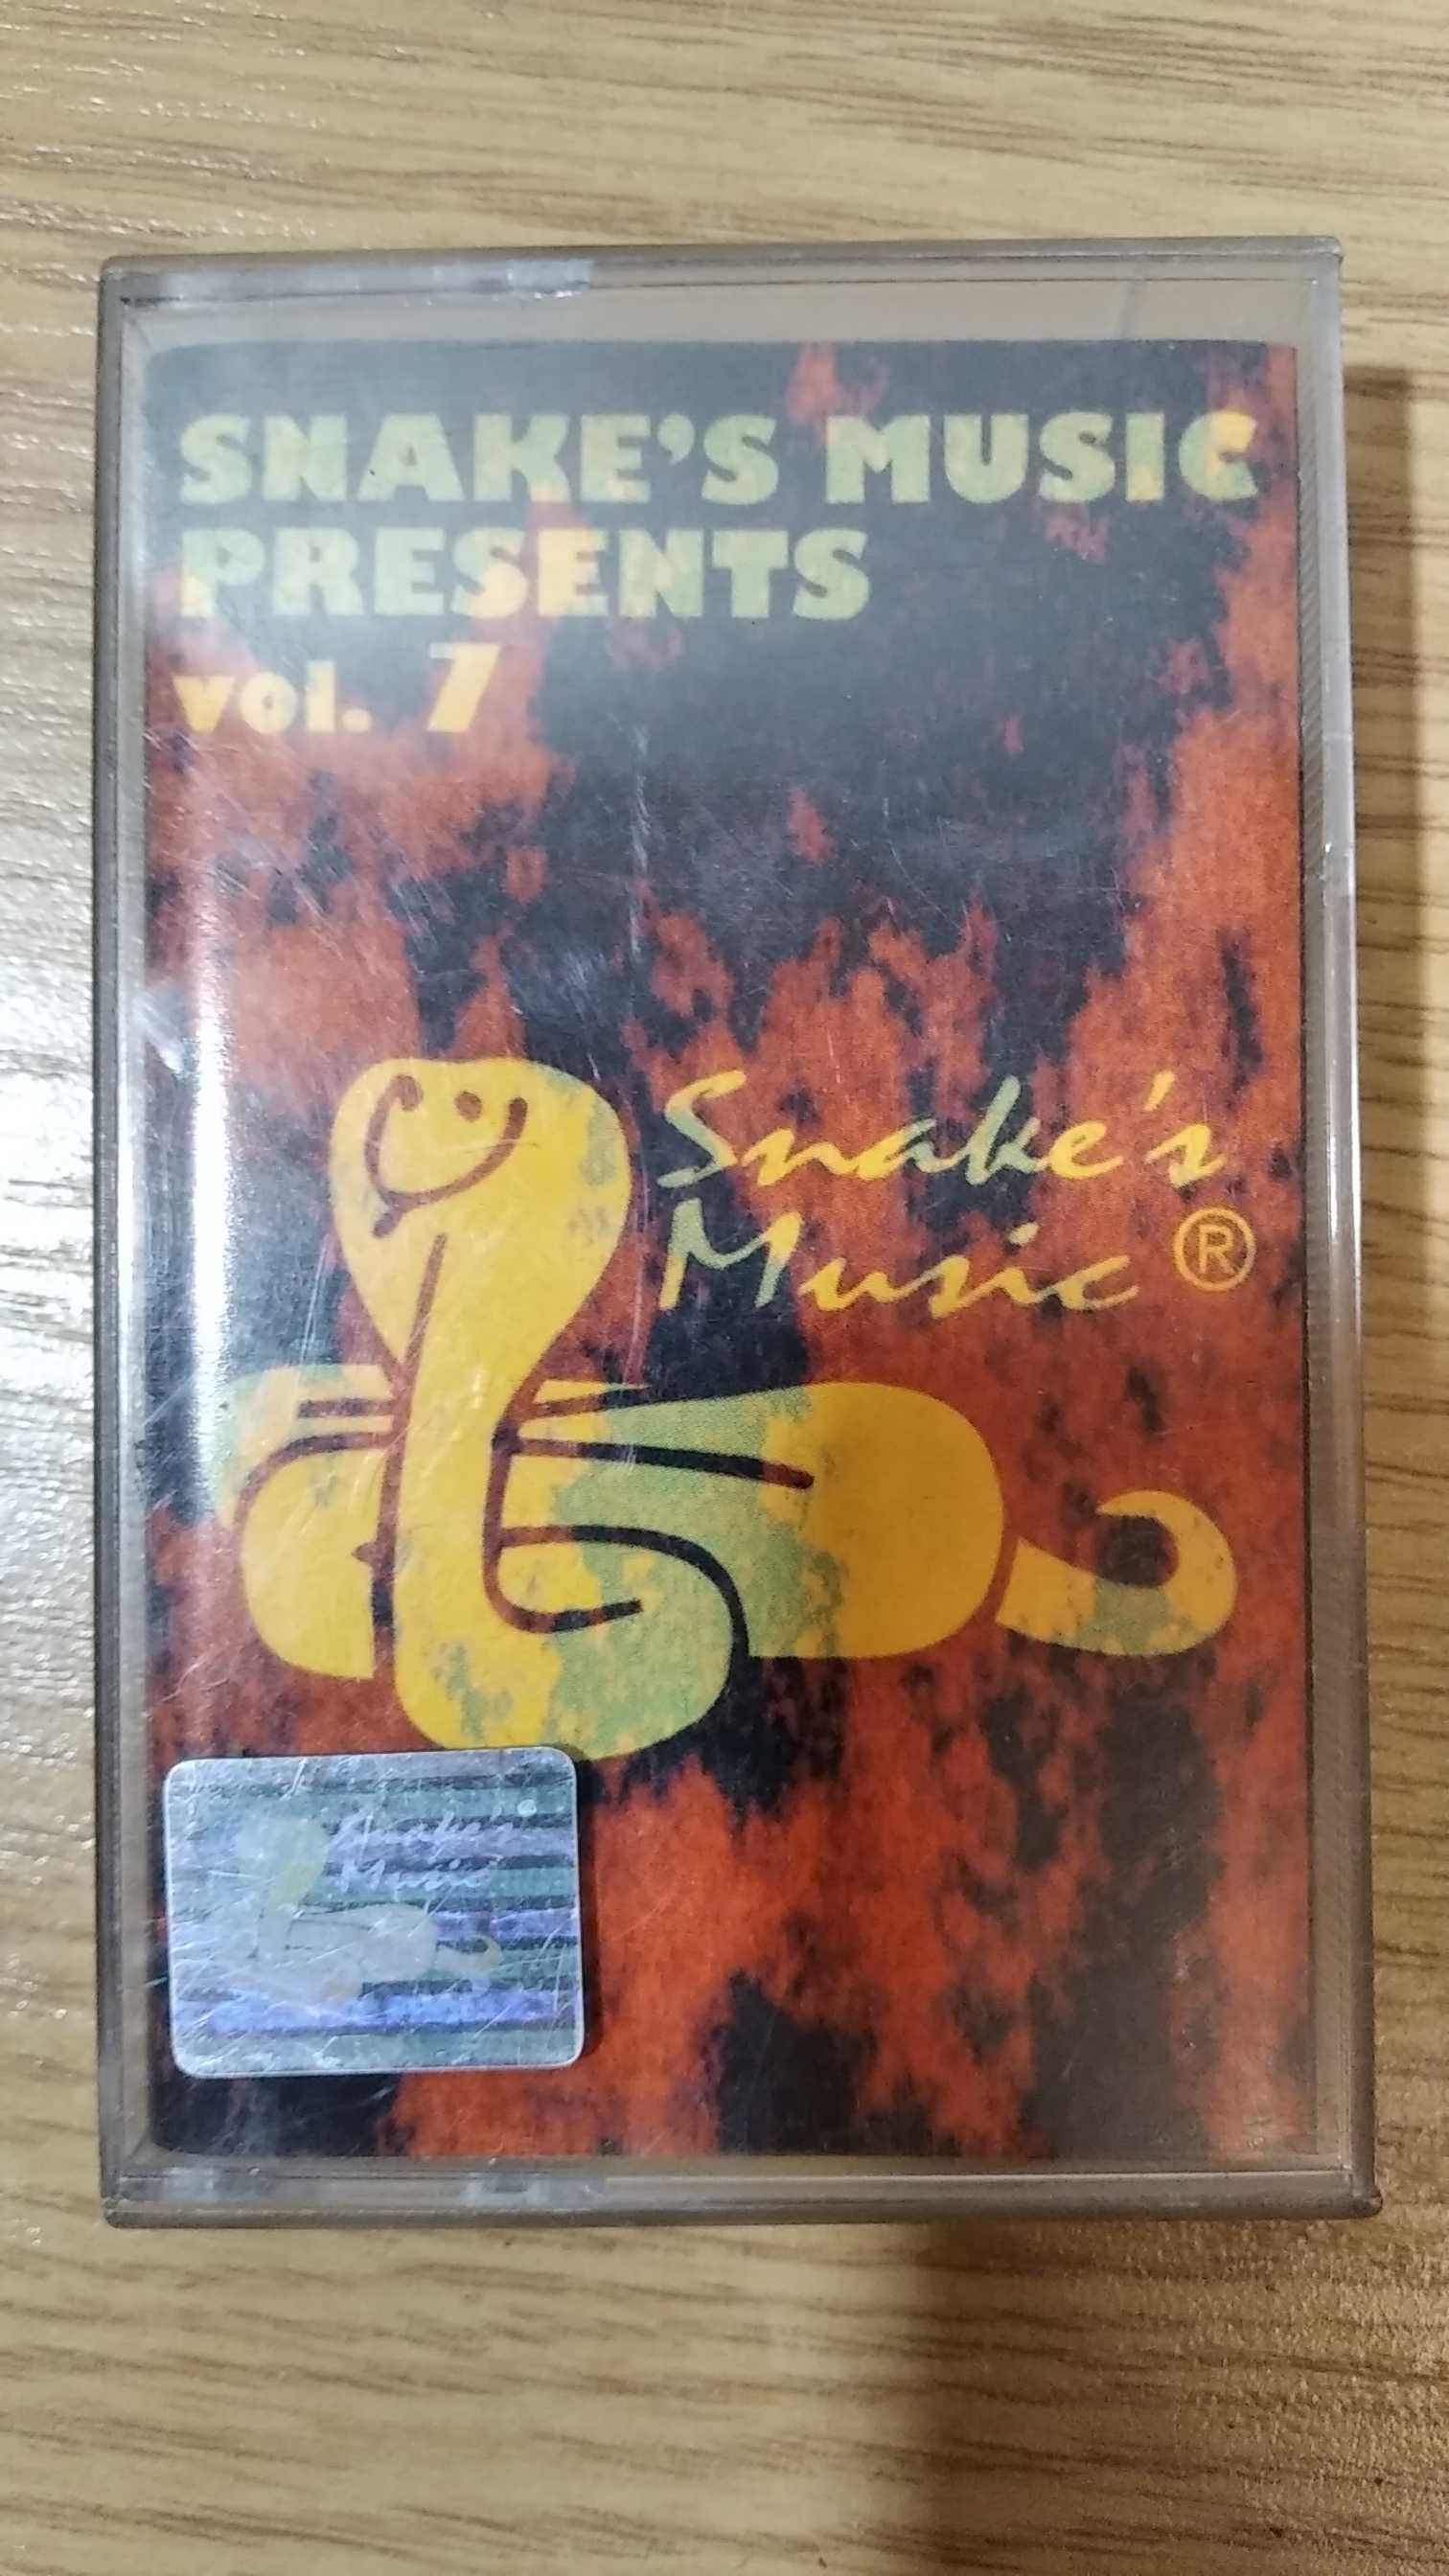 Kaseta Snake's Music Presents Vol. 7